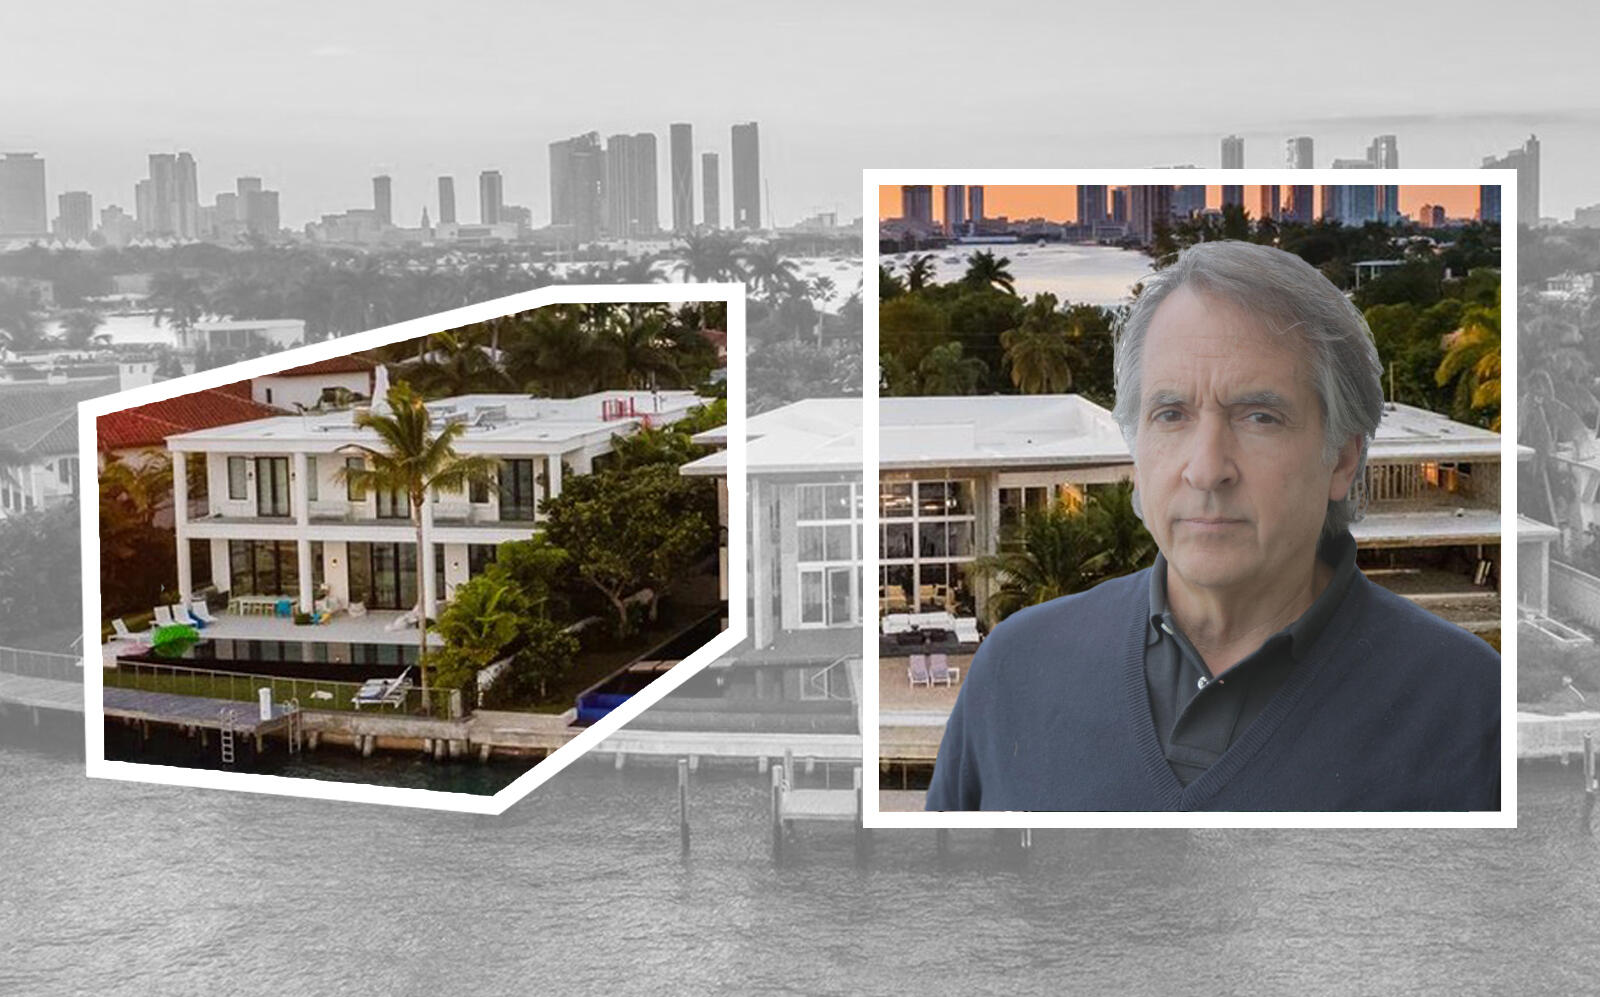 Kenneth Lerer bought the waterfront property in 2014. (Lerer Hippeau, Douglas Elliman)